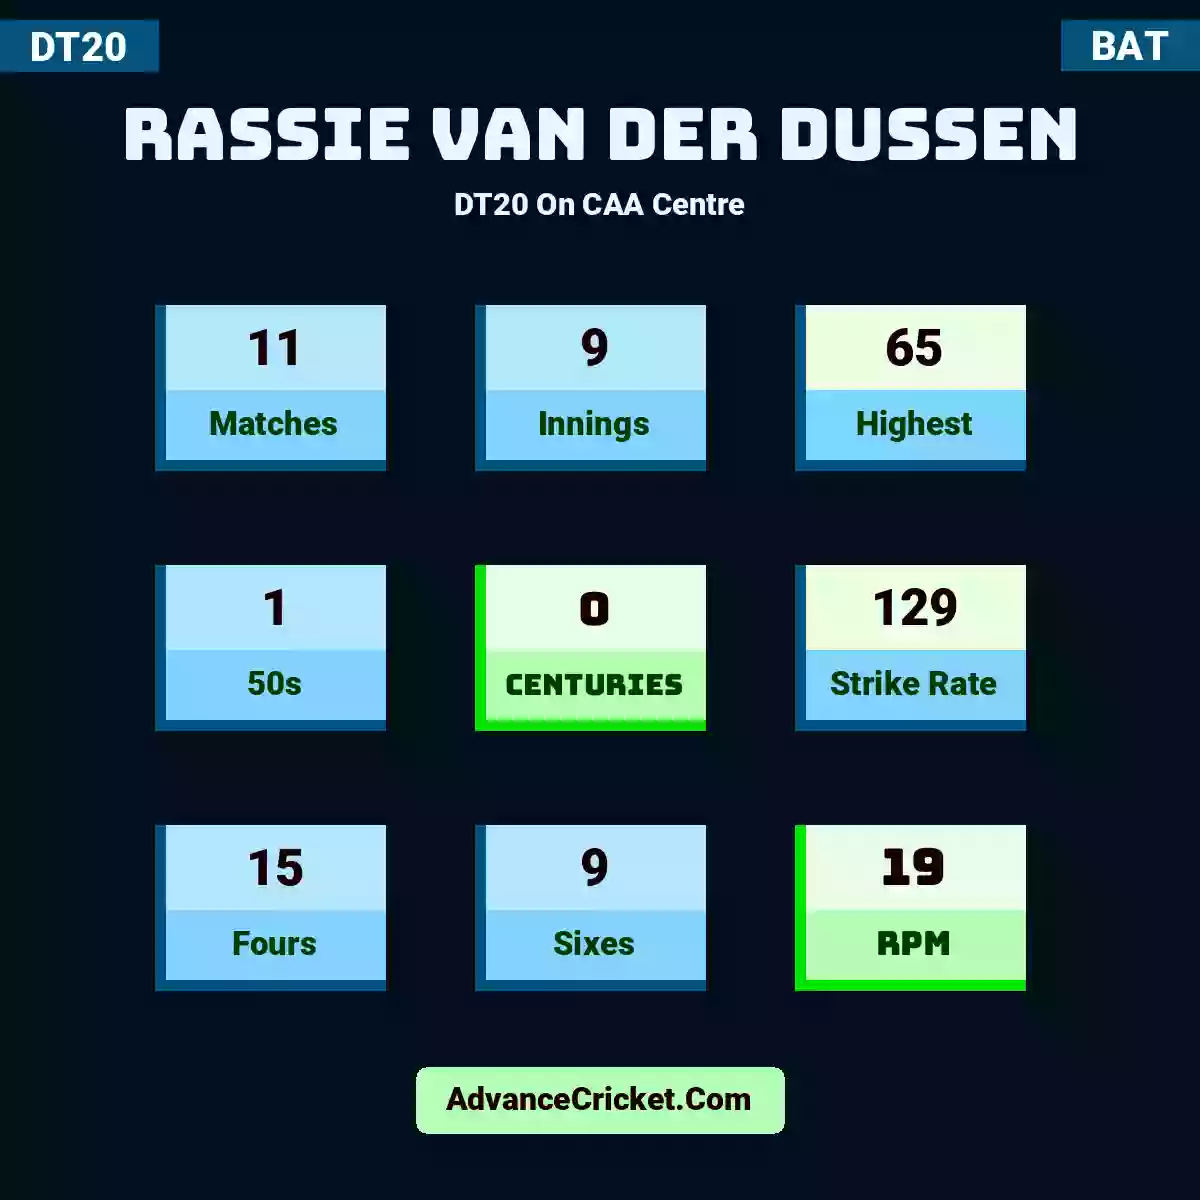 Rassie van der Dussen DT20  On CAA Centre, Rassie van der Dussen played 11 matches, scored 65 runs as highest, 1 half-centuries, and 0 centuries, with a strike rate of 129. R.Dussen hit 15 fours and 9 sixes, with an RPM of 19.